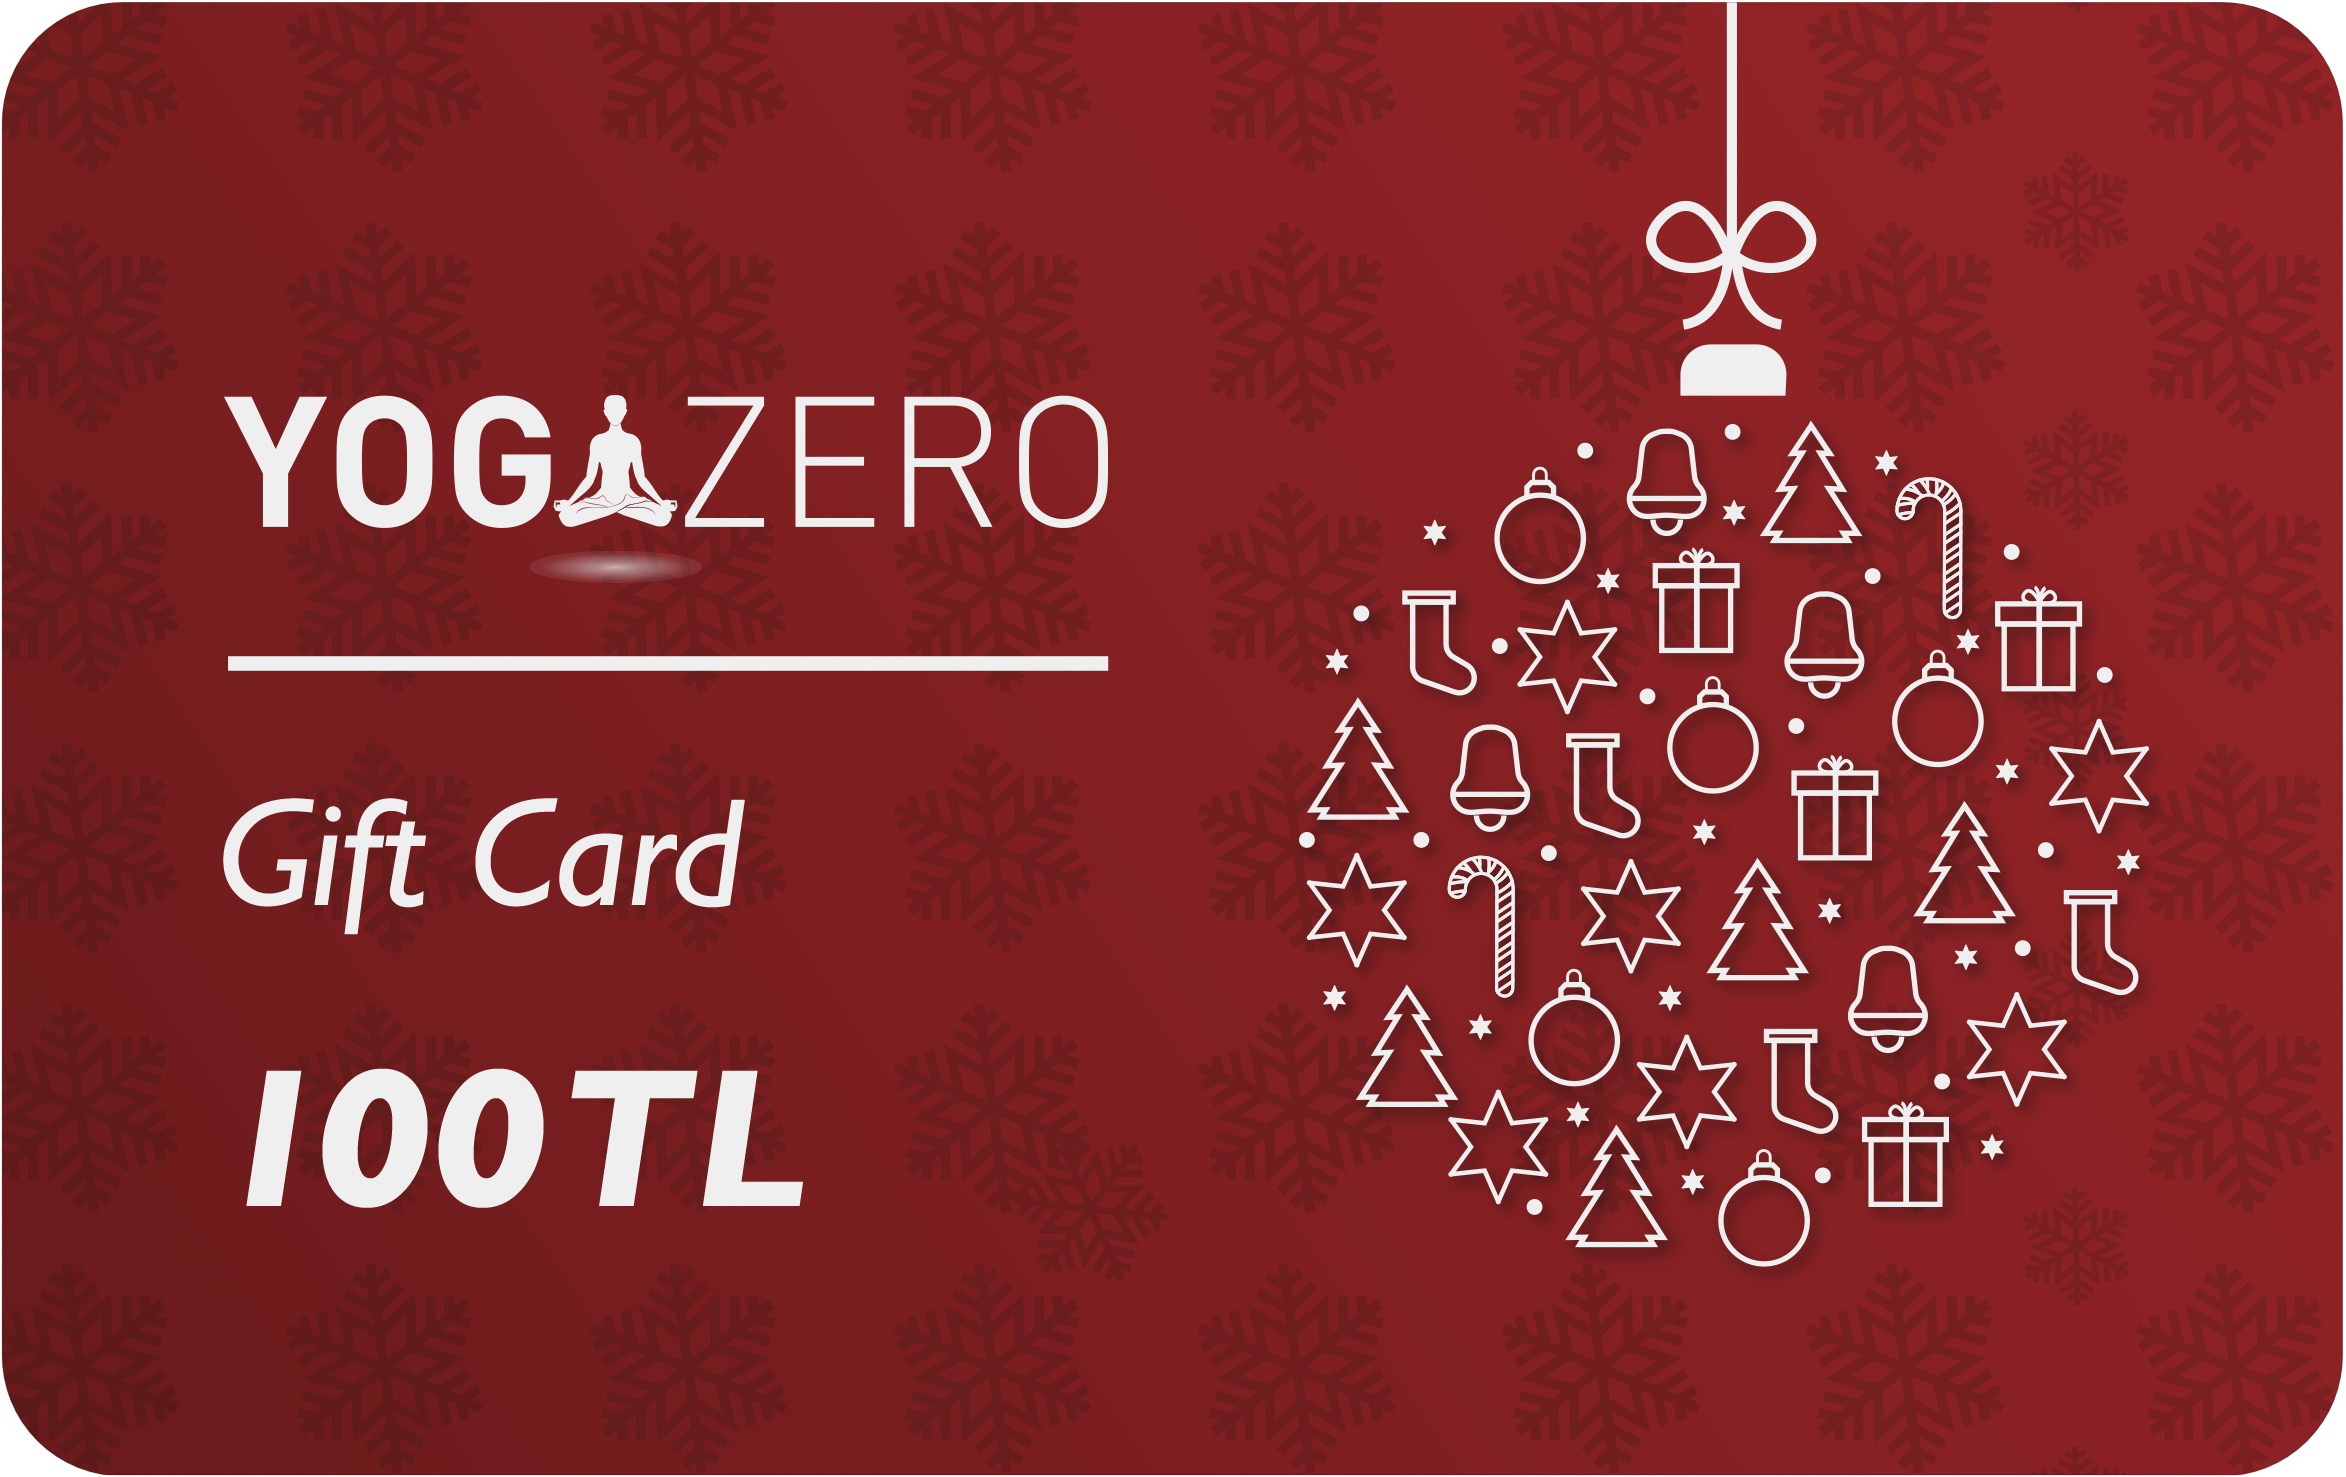 Yogazero Gift Card - 100.-TL